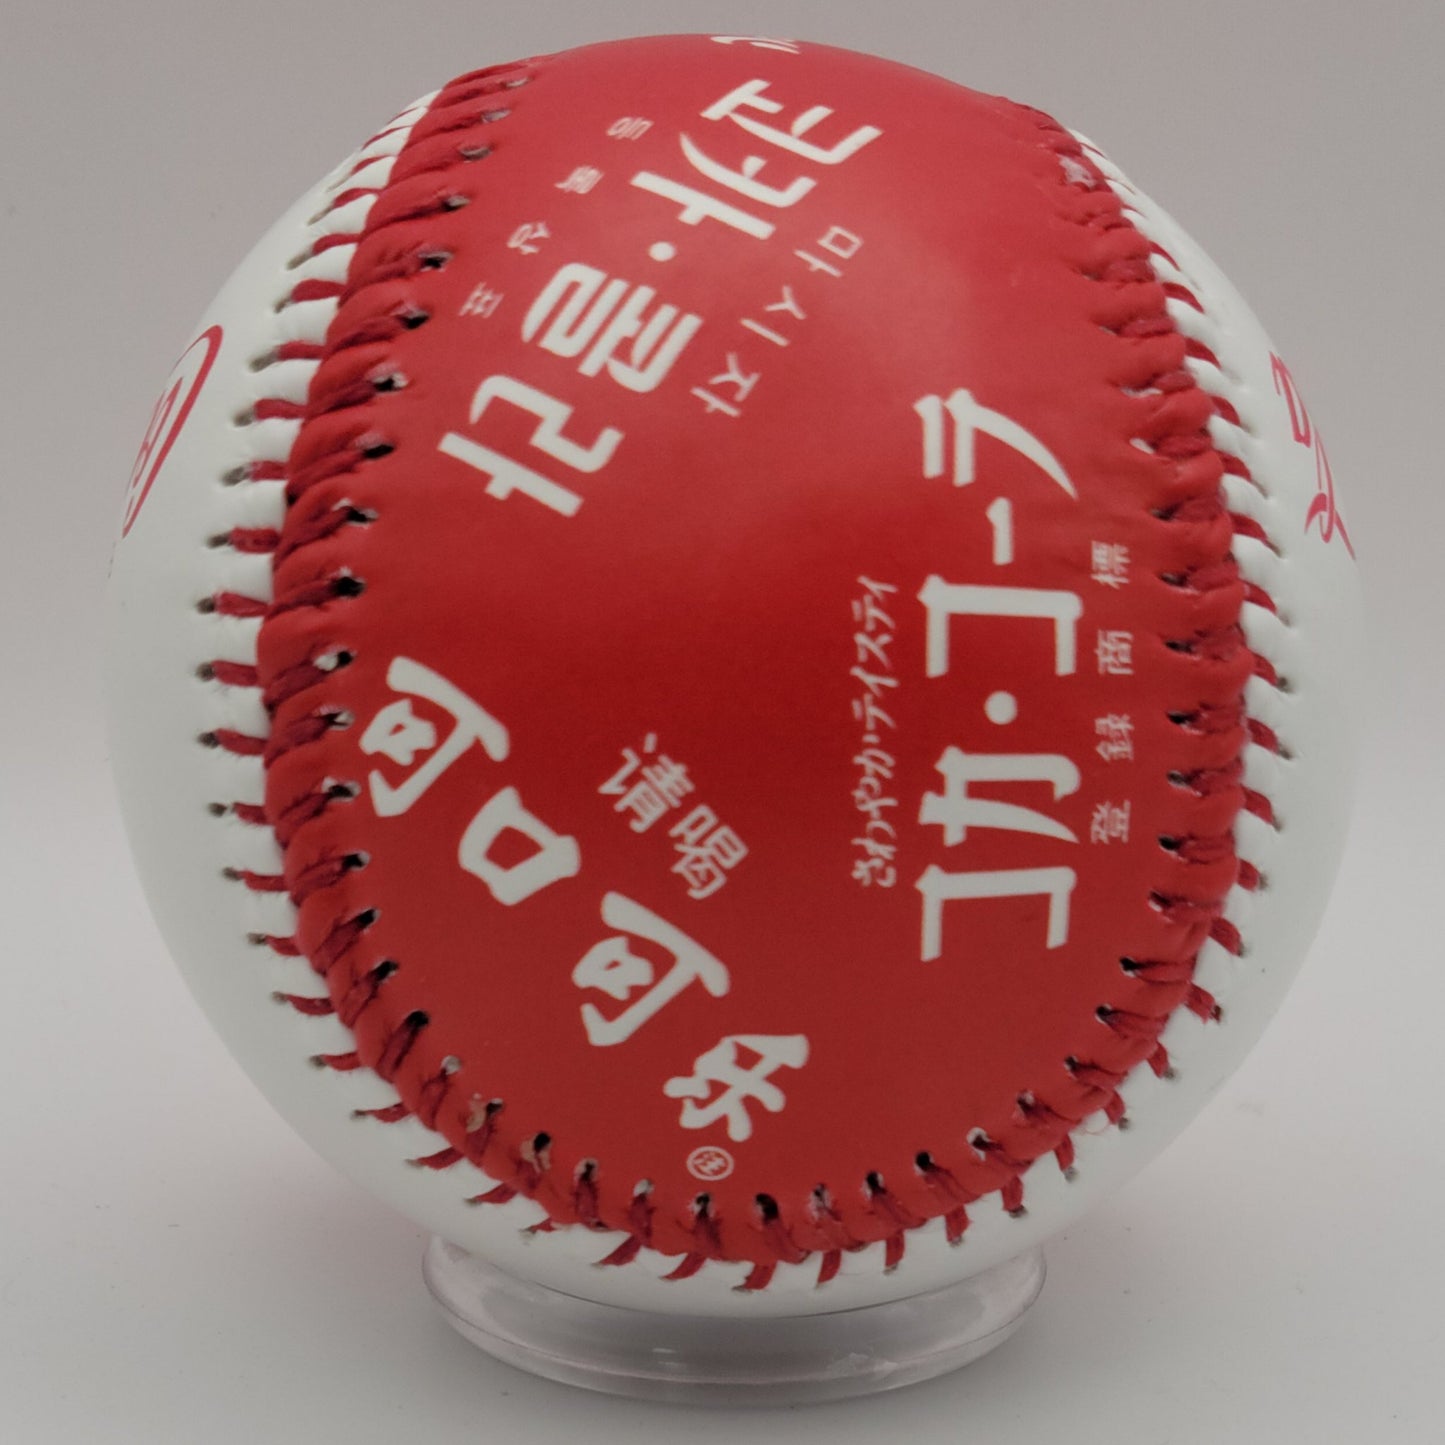 Coca-Cola Collectible Languages Baseball